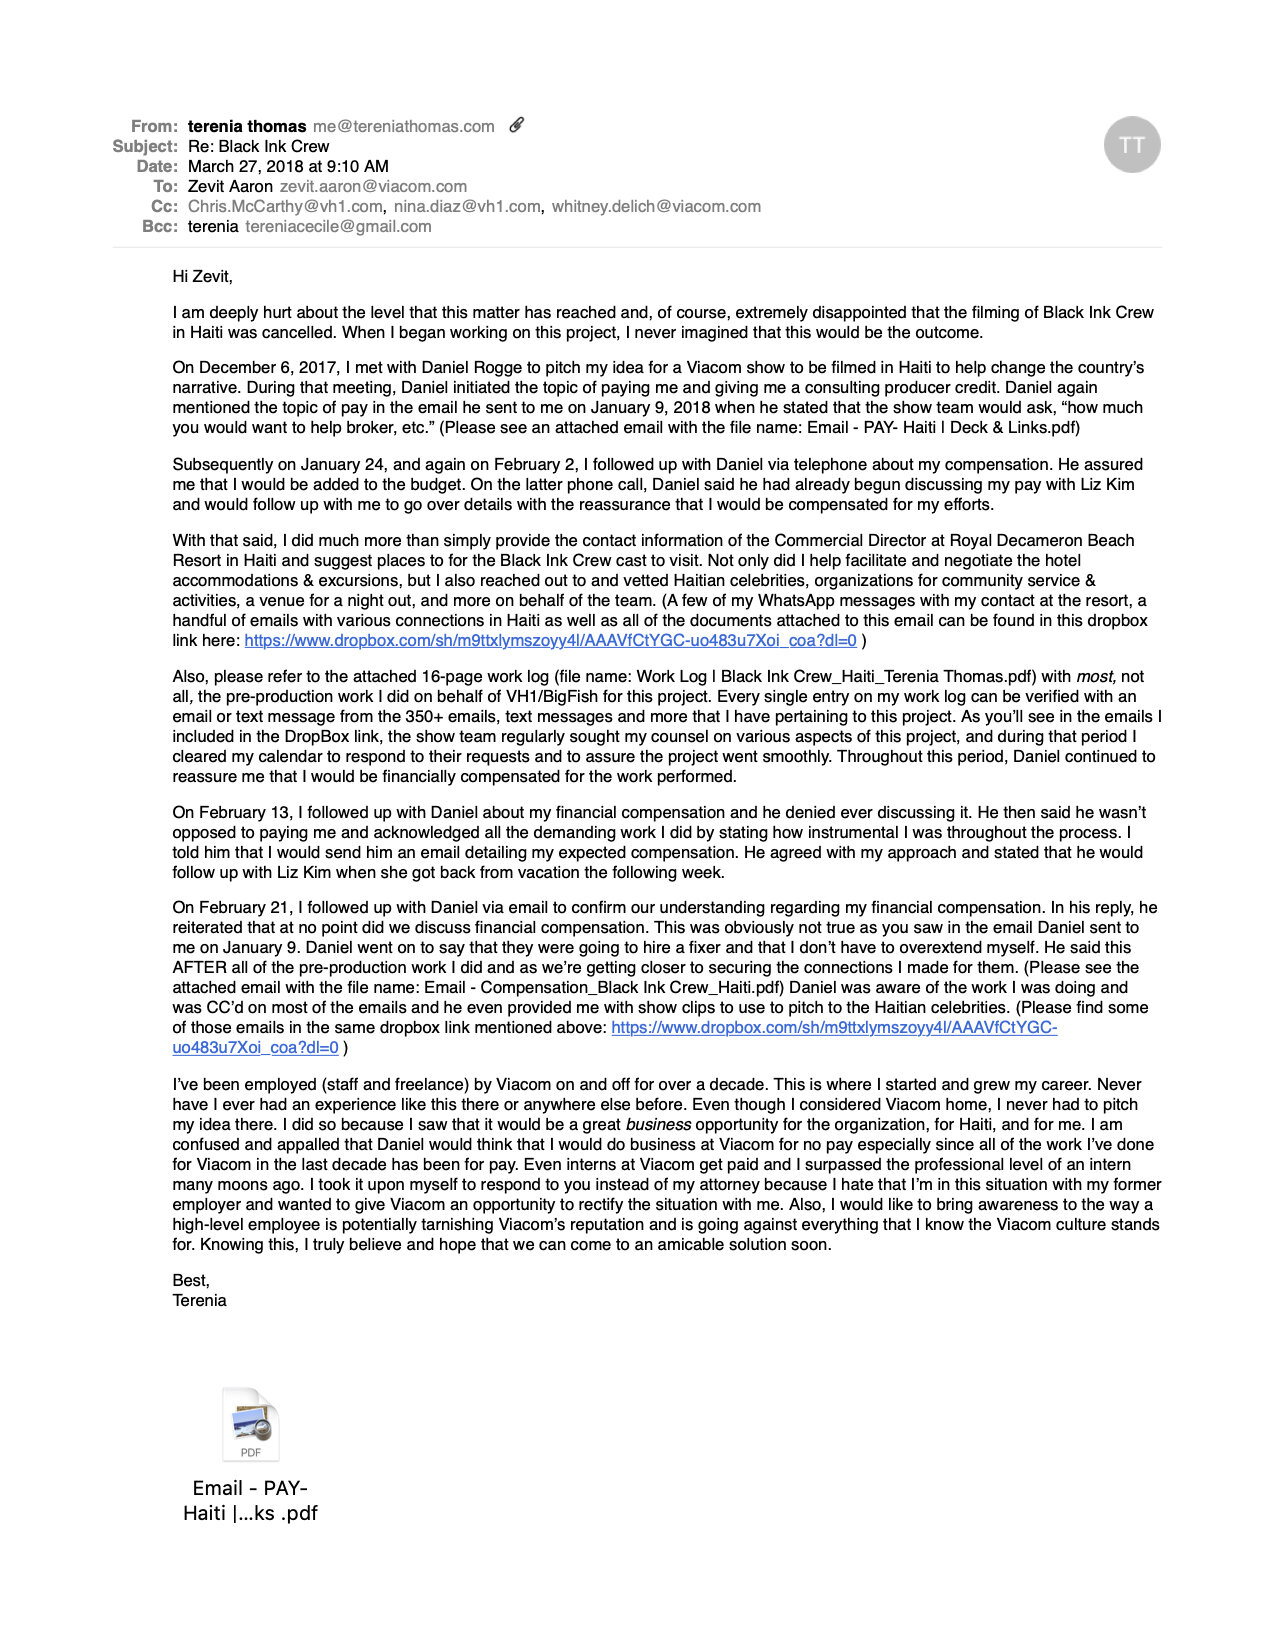 3-27-18 Email - Black Ink Crew Claim Response - Zevit and Executives.JPG